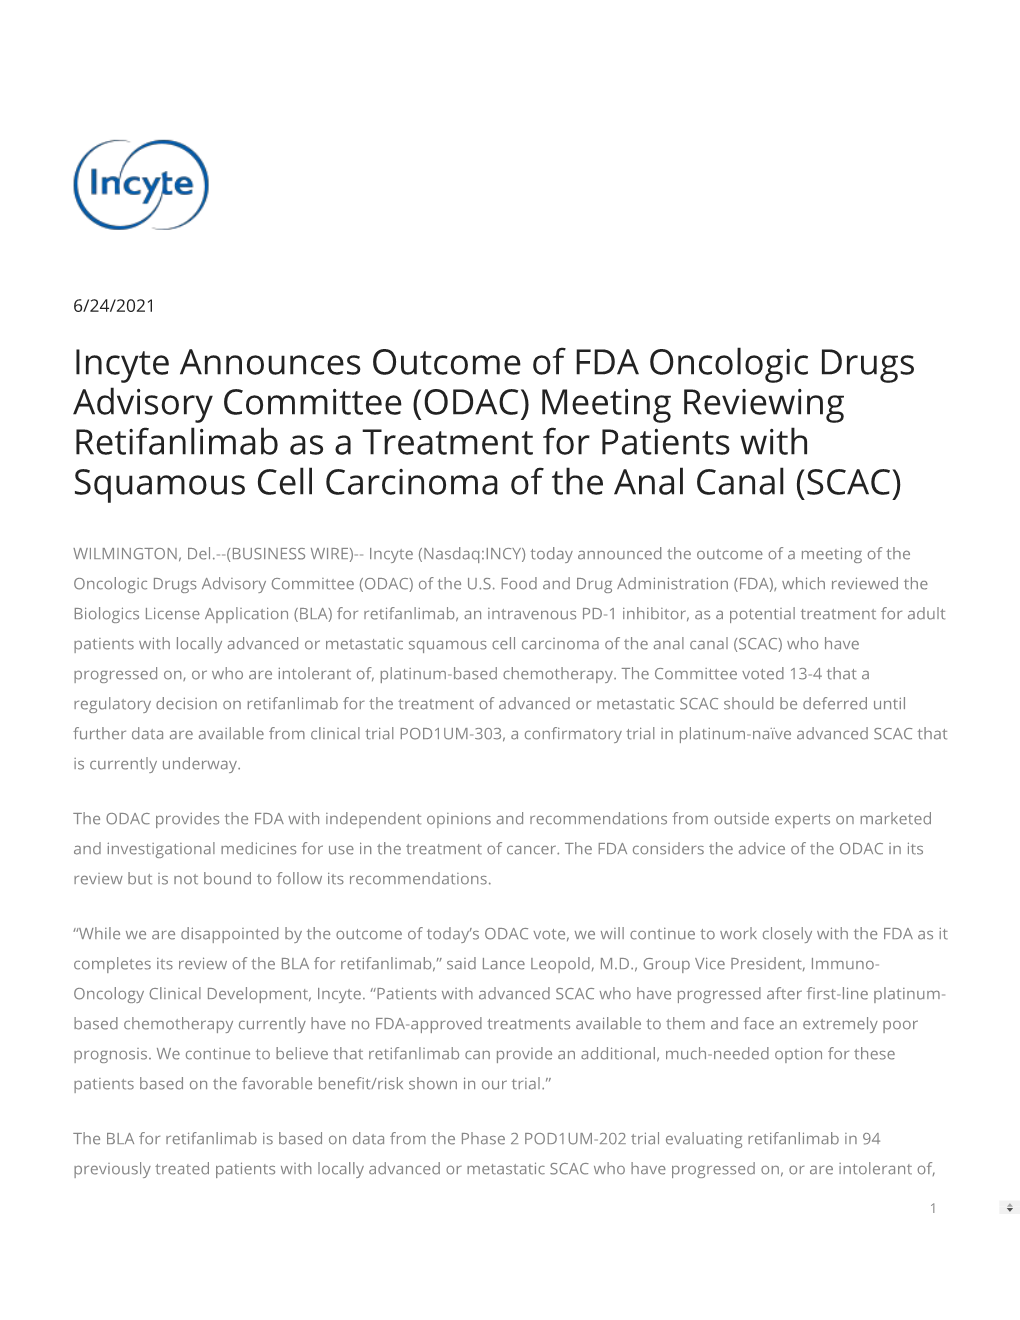 Incyte Announces Outcome of FDA Oncologic Drugs Advisory